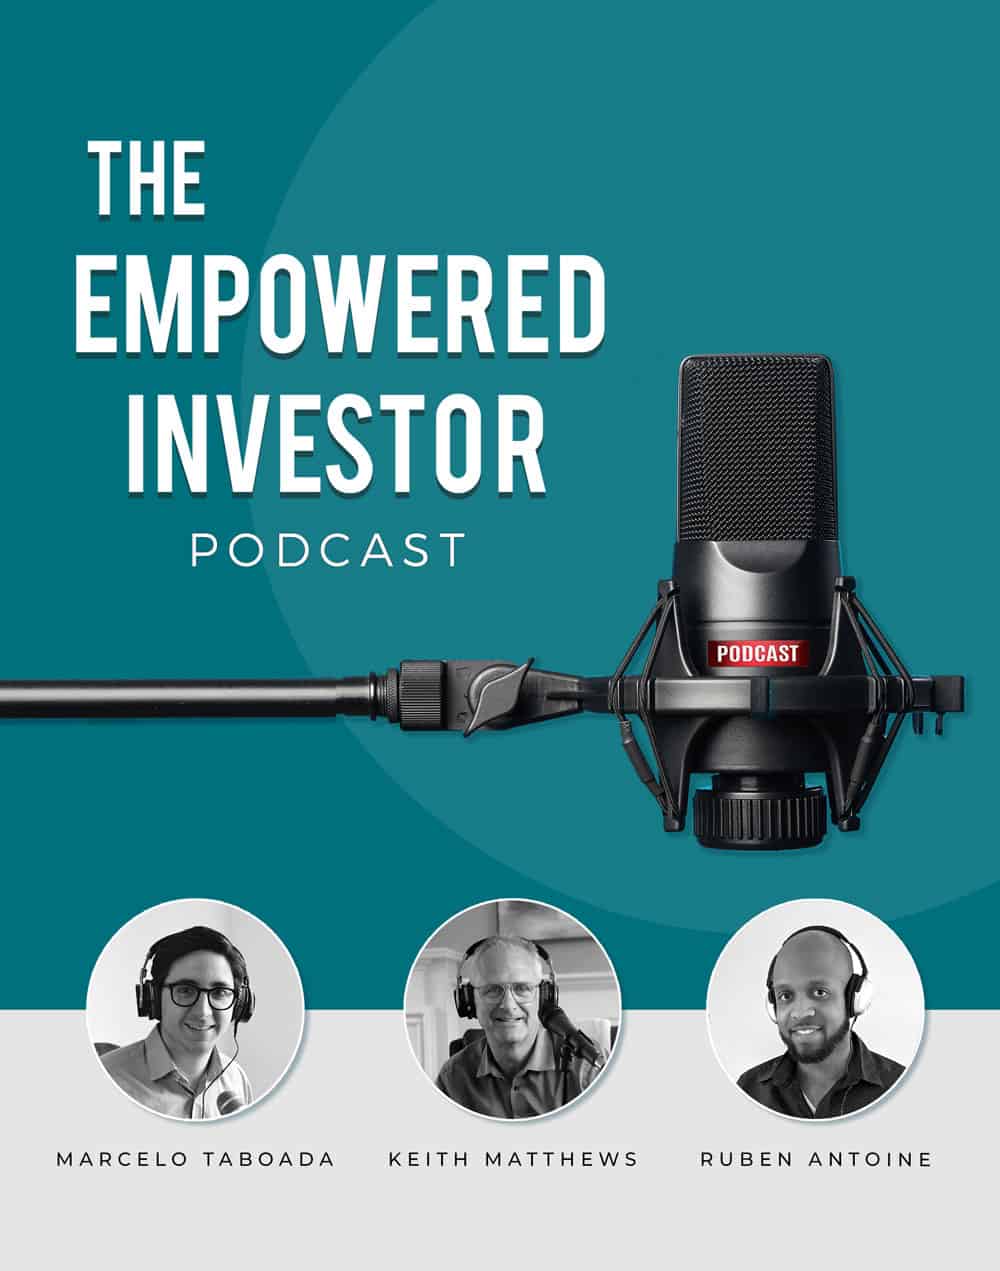 The Empowered Investor Poscast